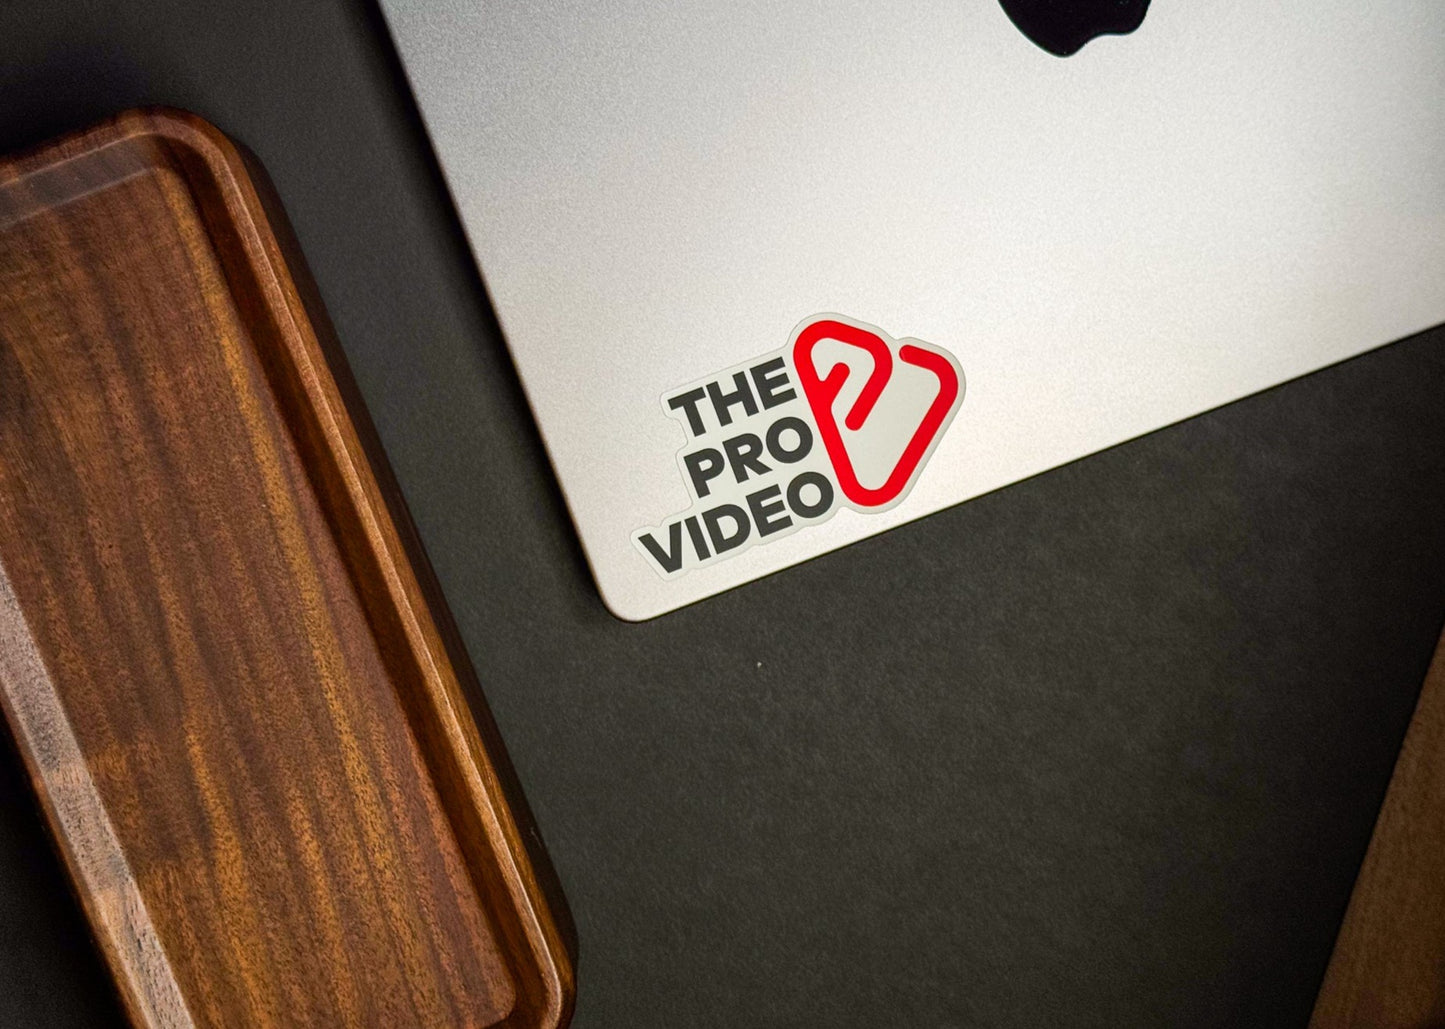 The pro Video- Sticker